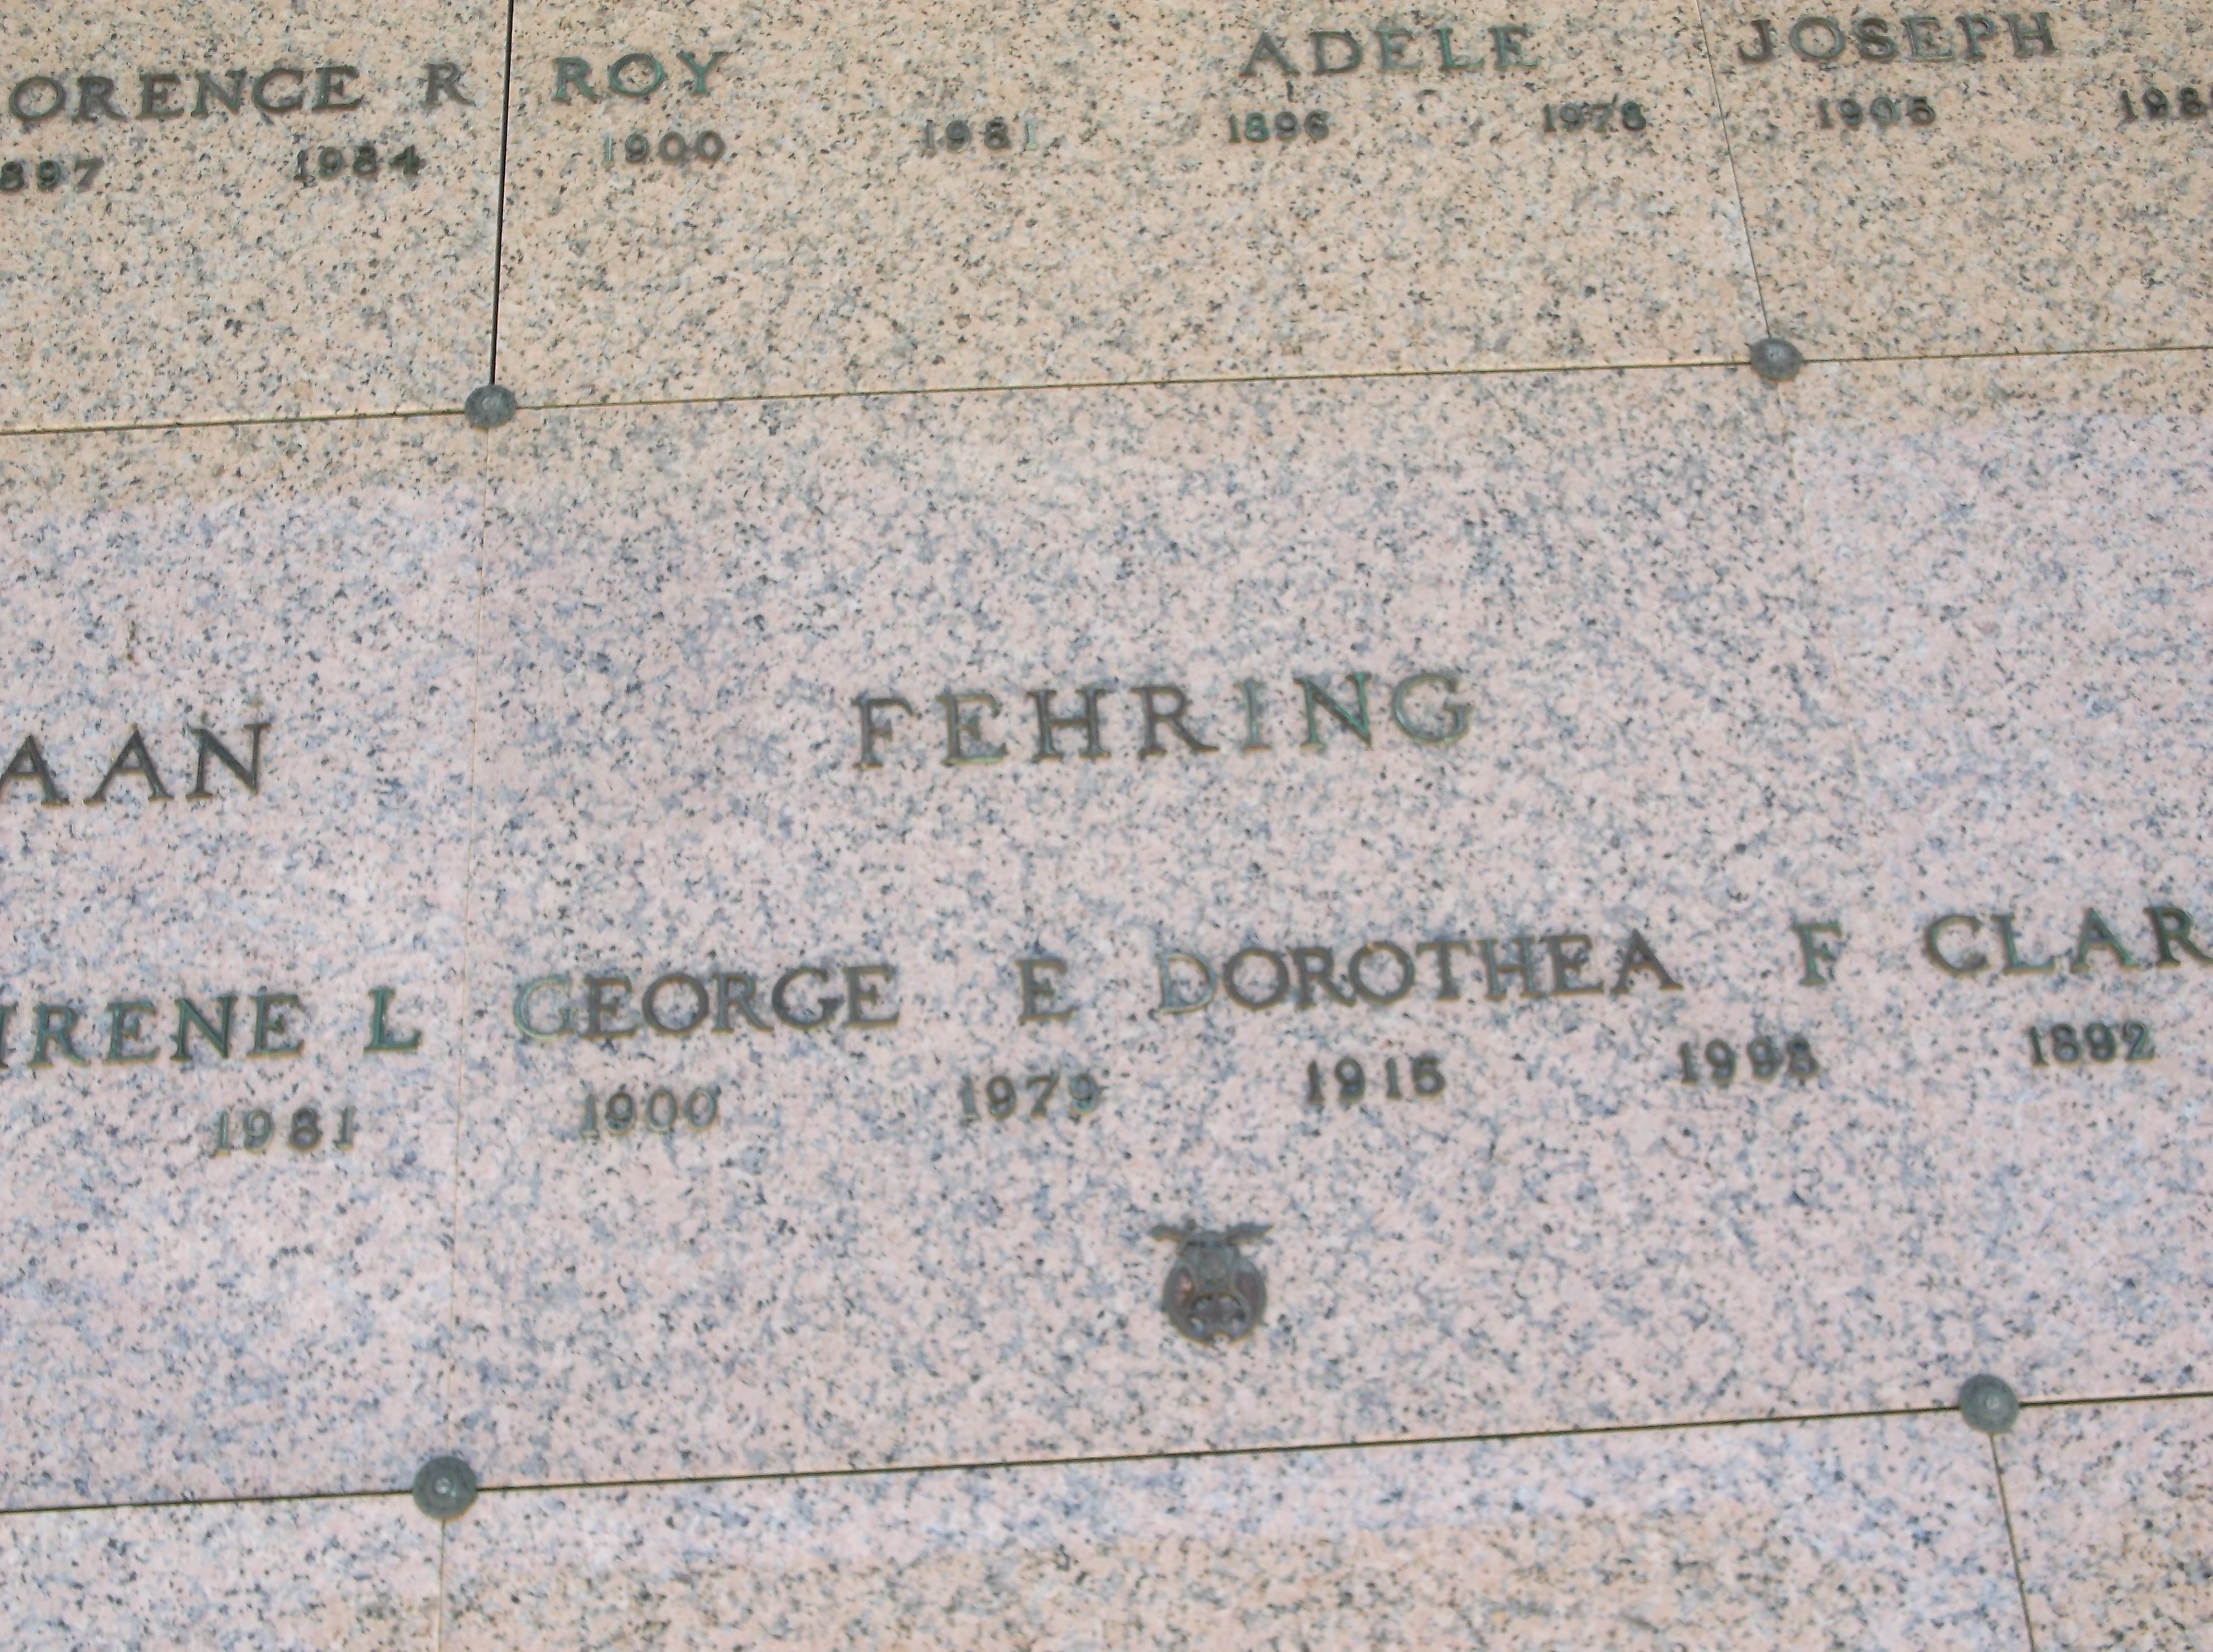 George E Fehring